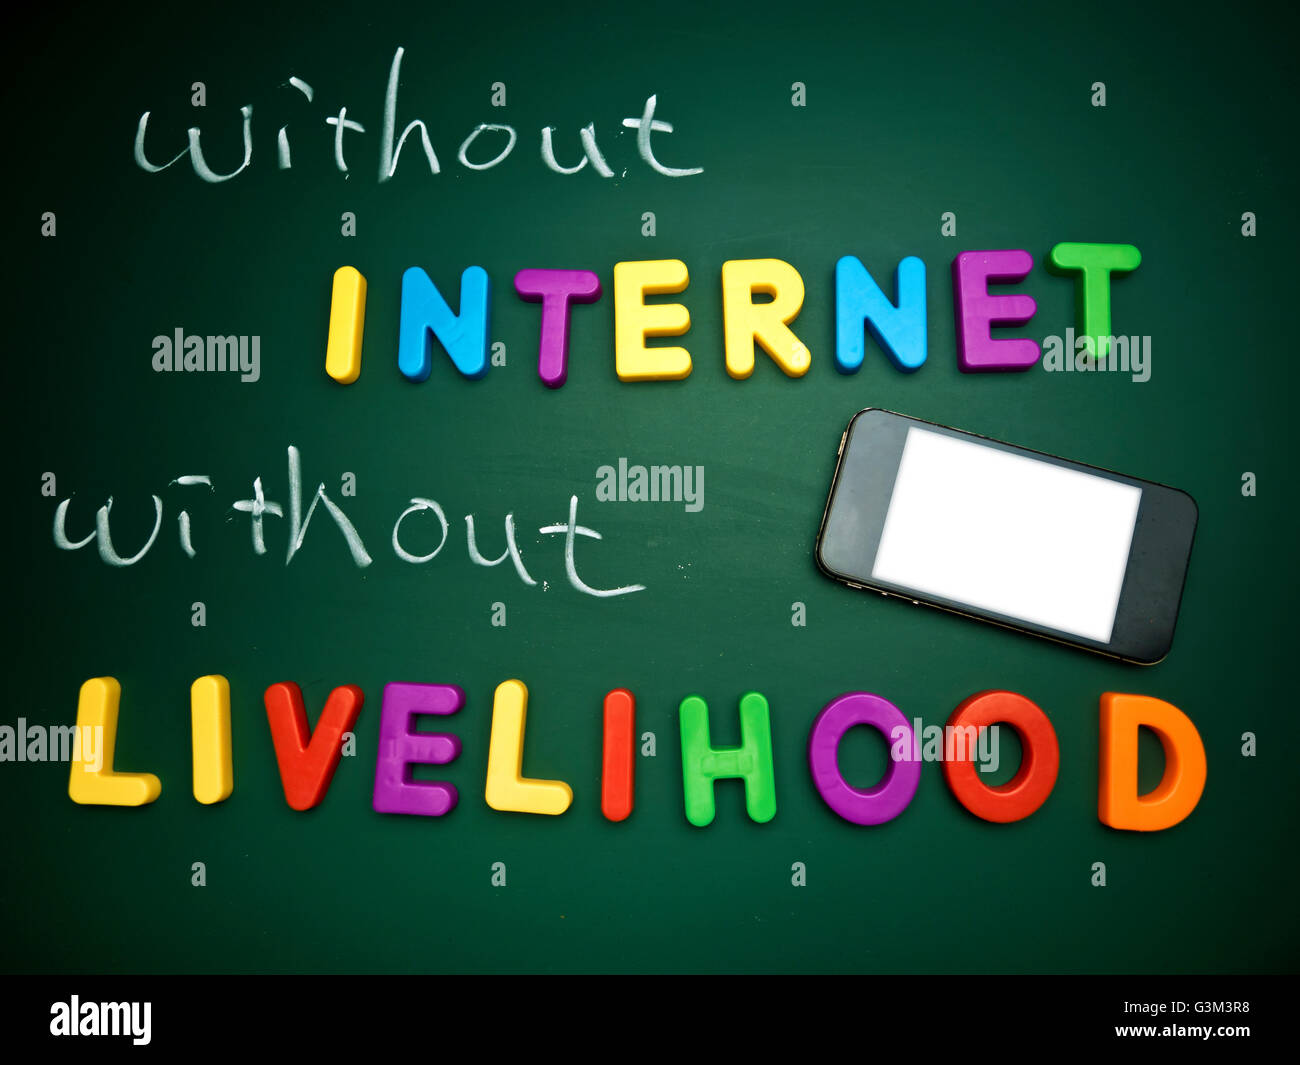 text without internet without livelihood on blackboard Stock Photo